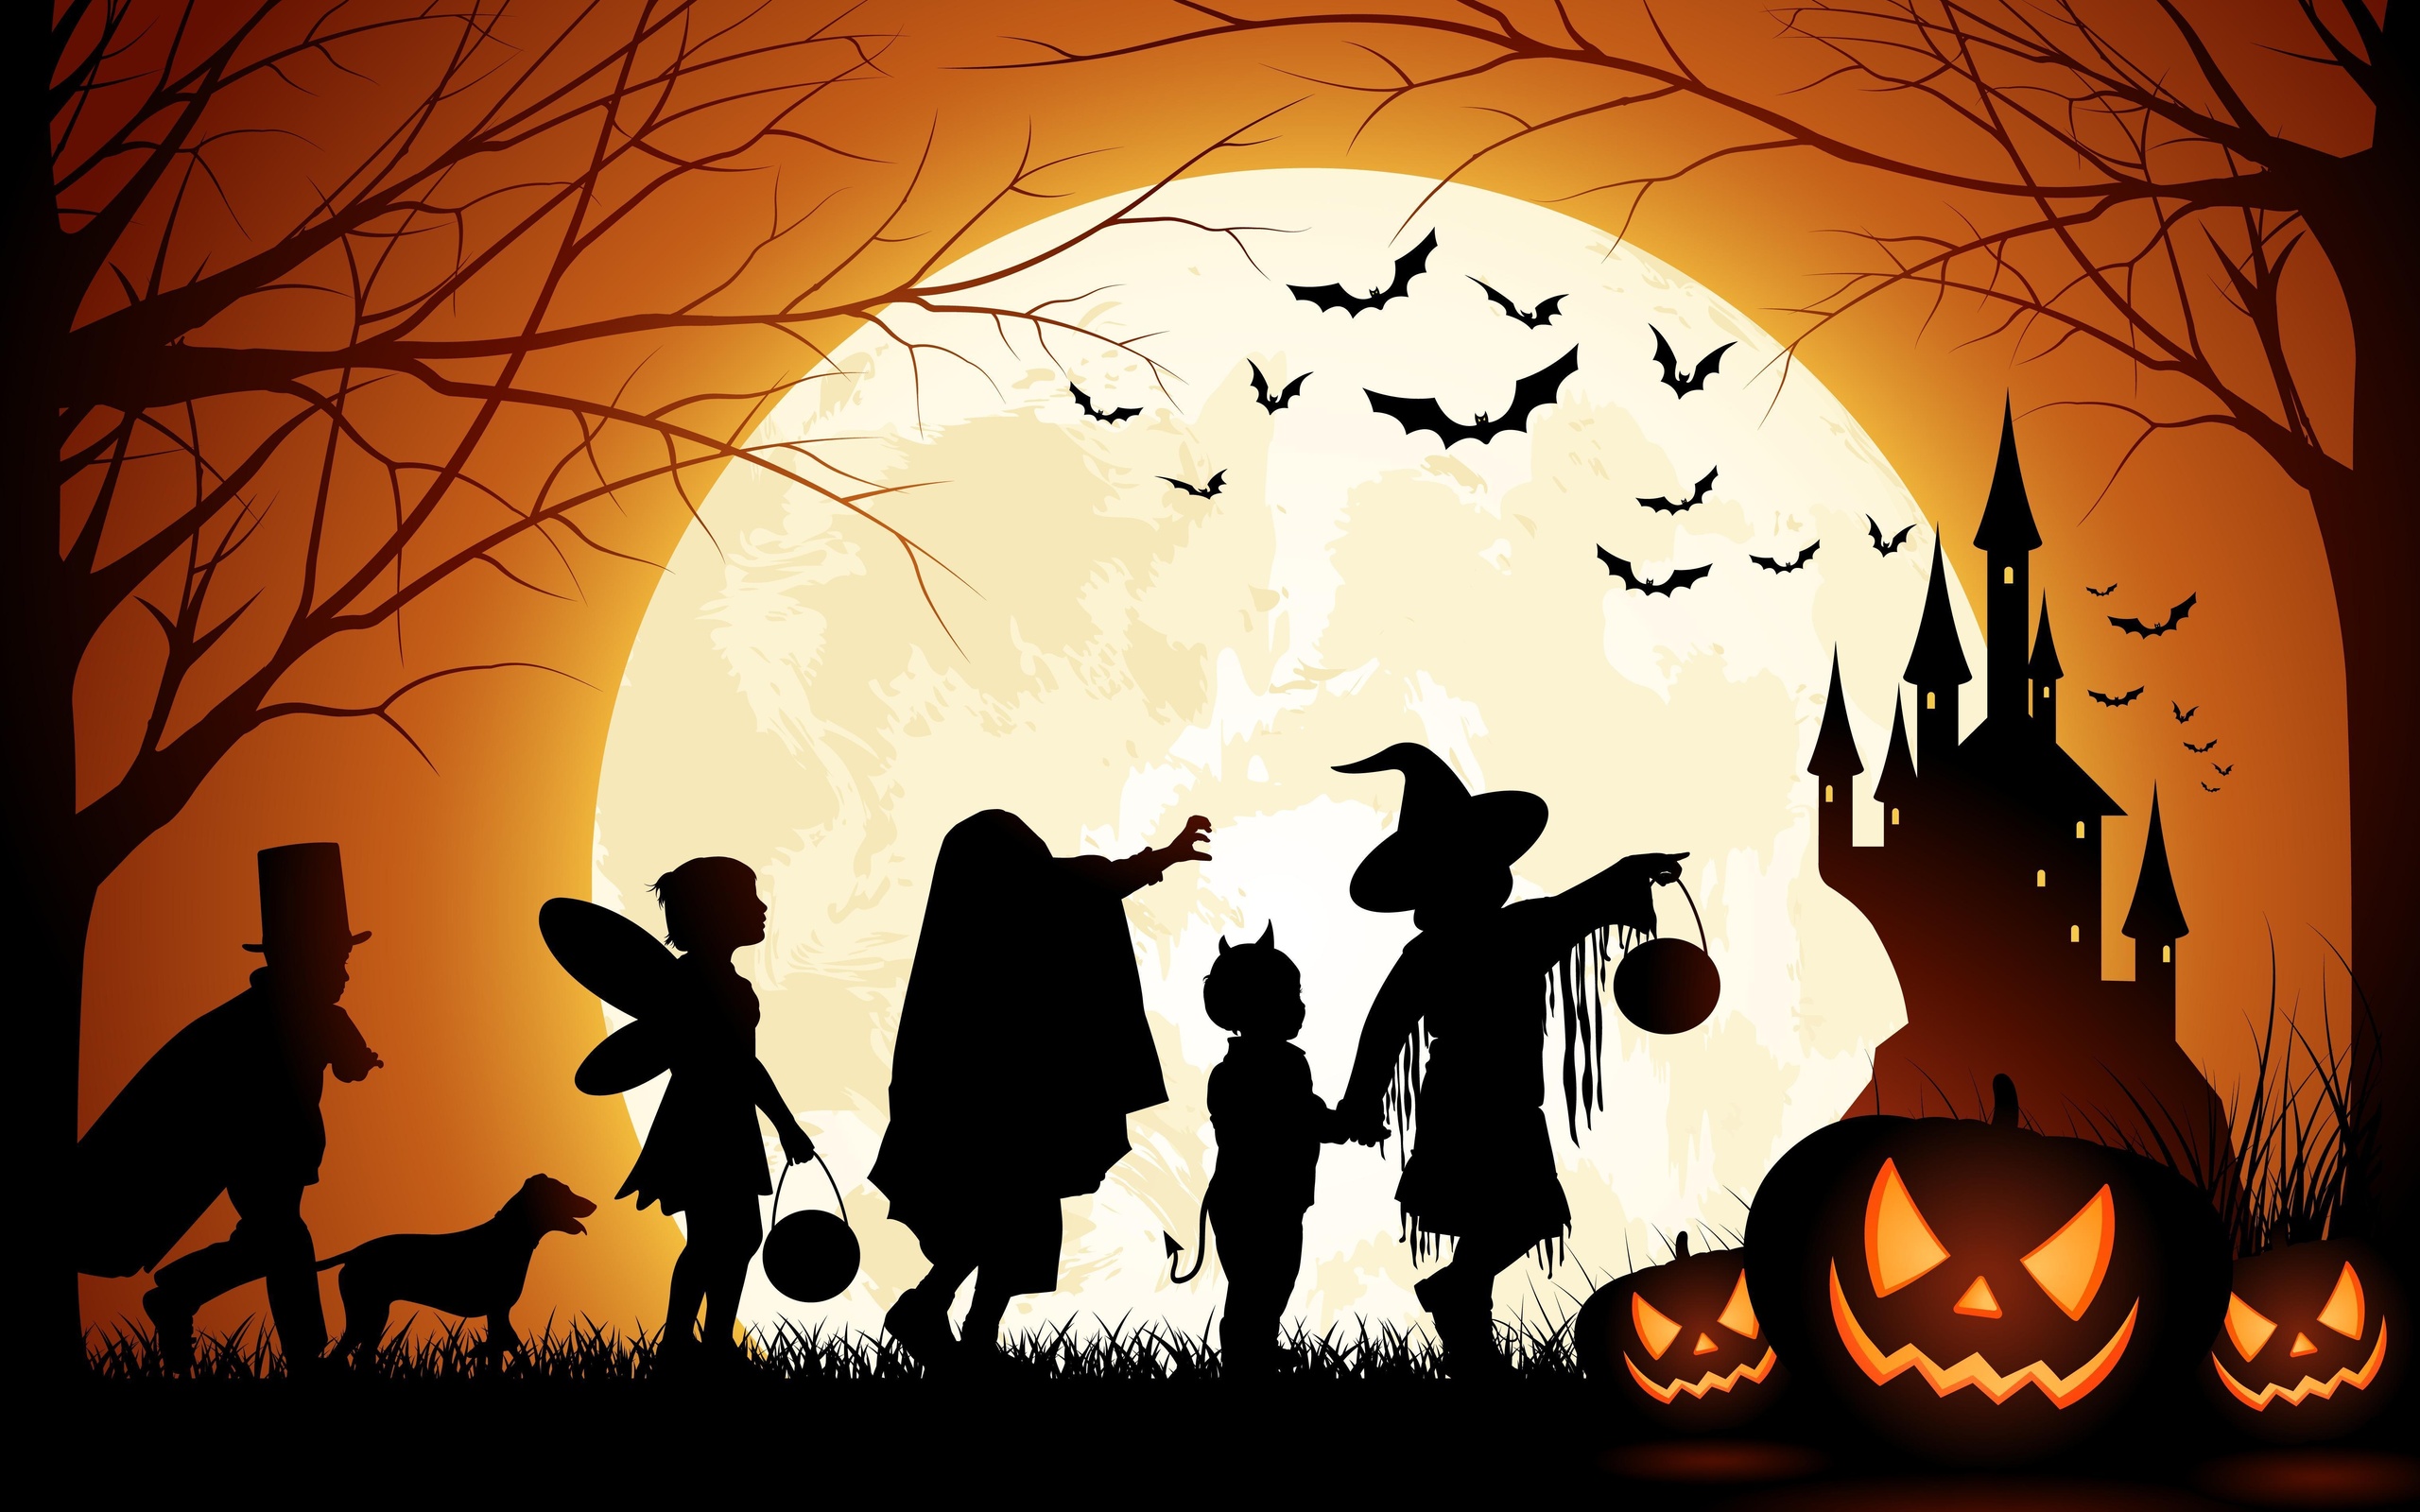 trees, pumpkin, men and dog, castle, Halloween, moon, bats